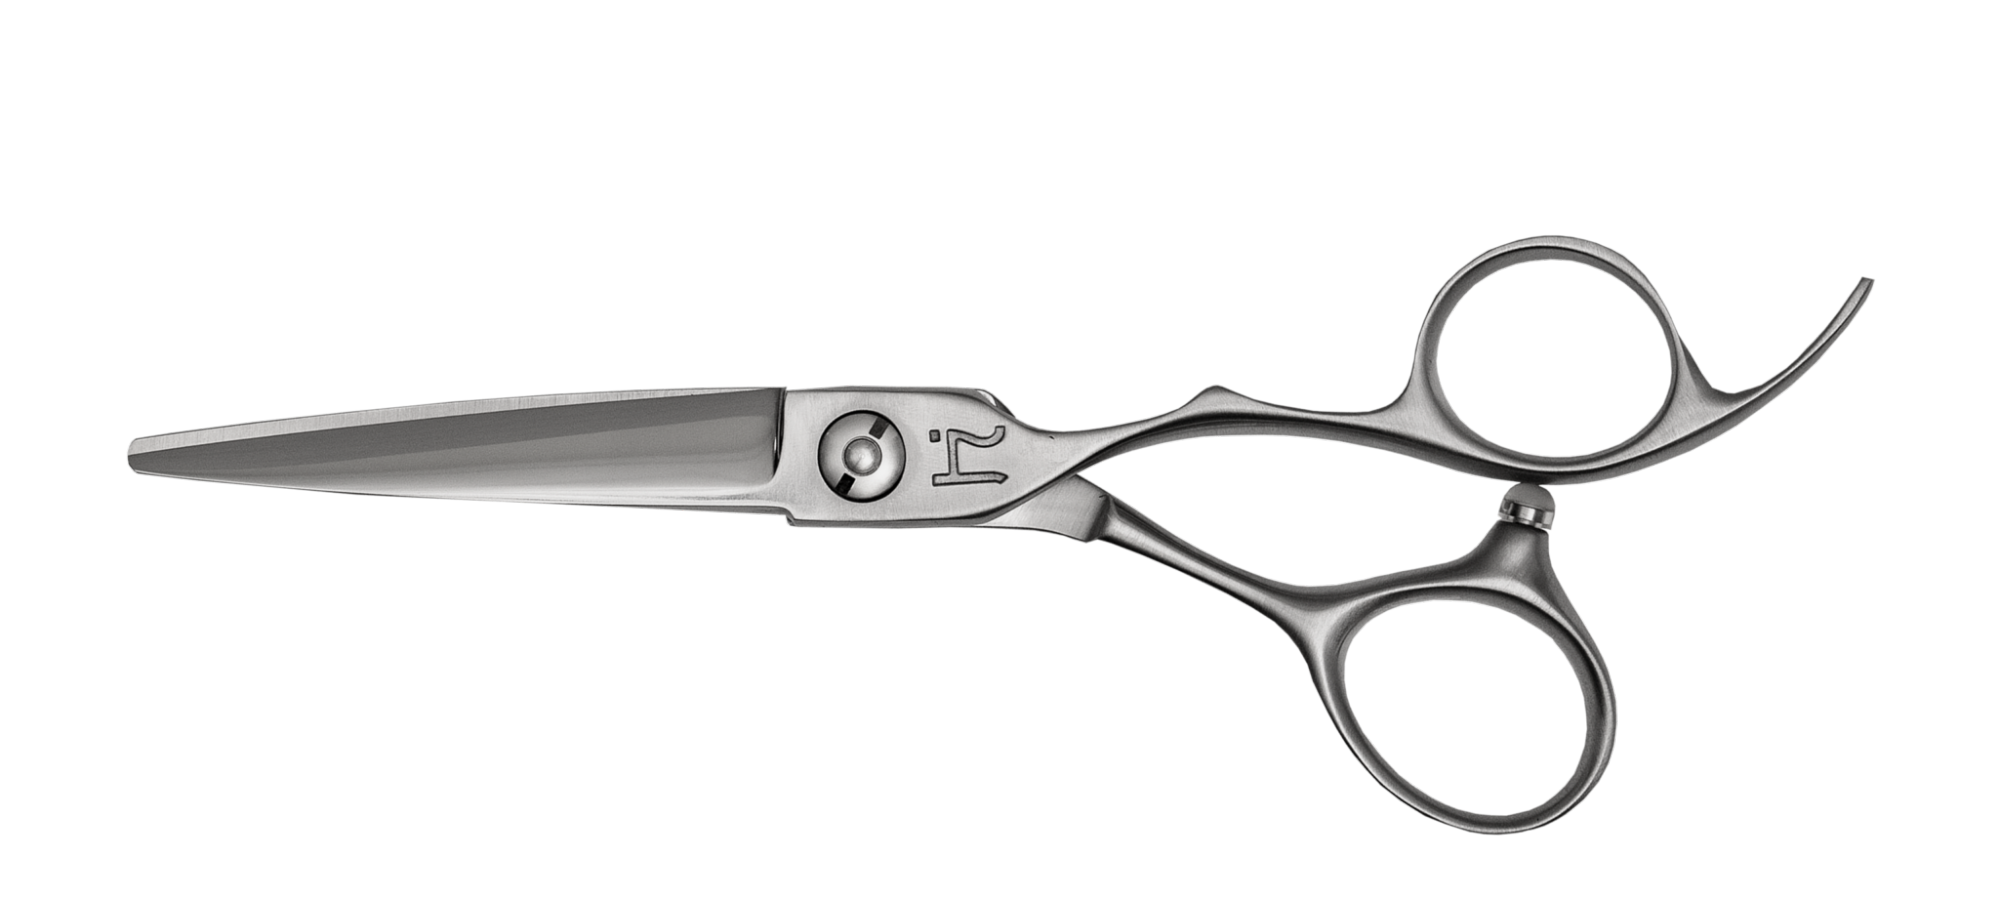 cool hairstylist scissors